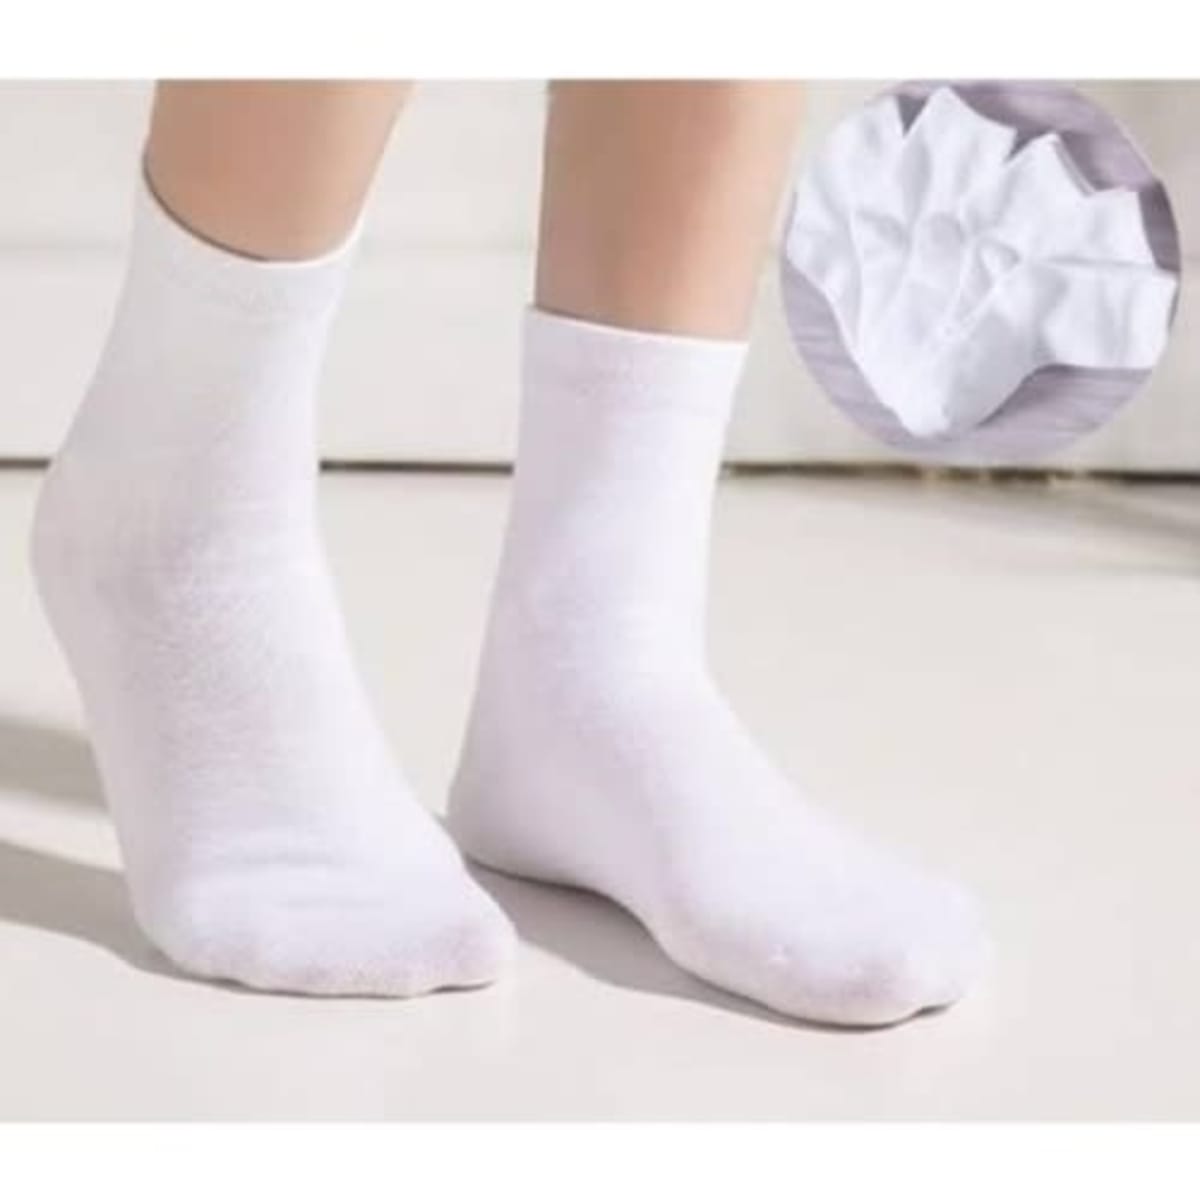 Fashion Front Socks For Kids - Set Of 6 - White